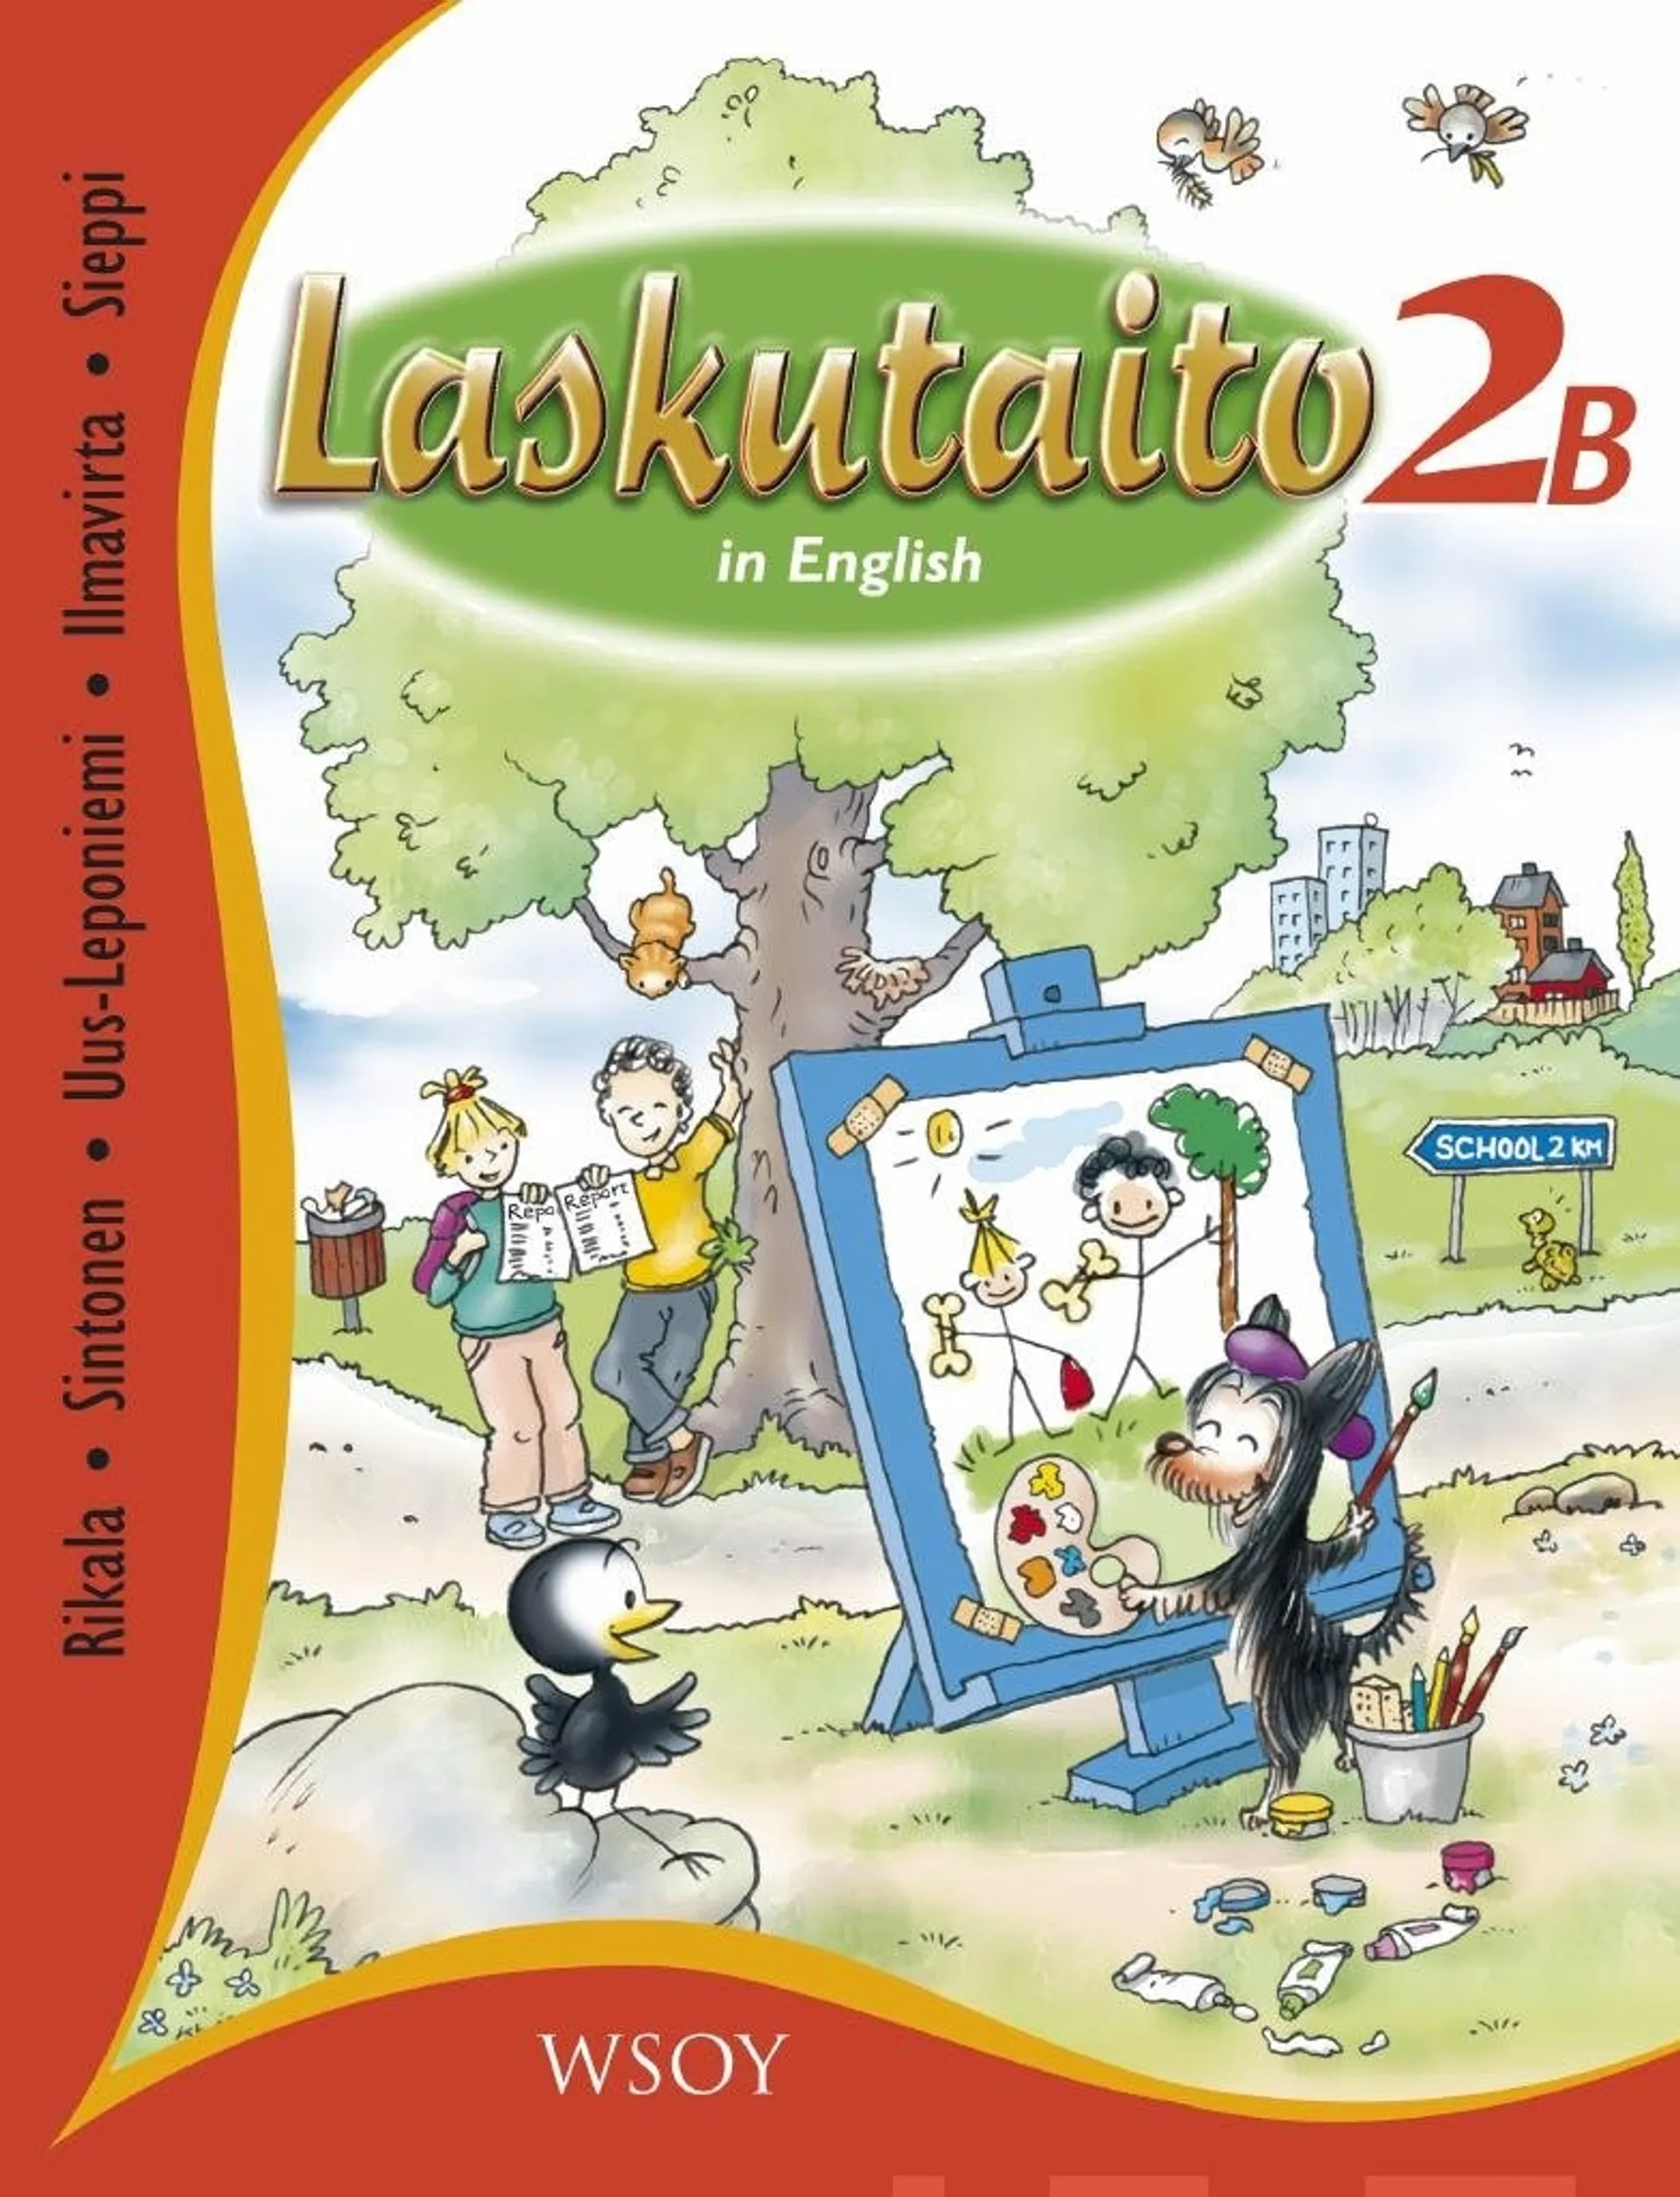 Laskutaito 2B in English